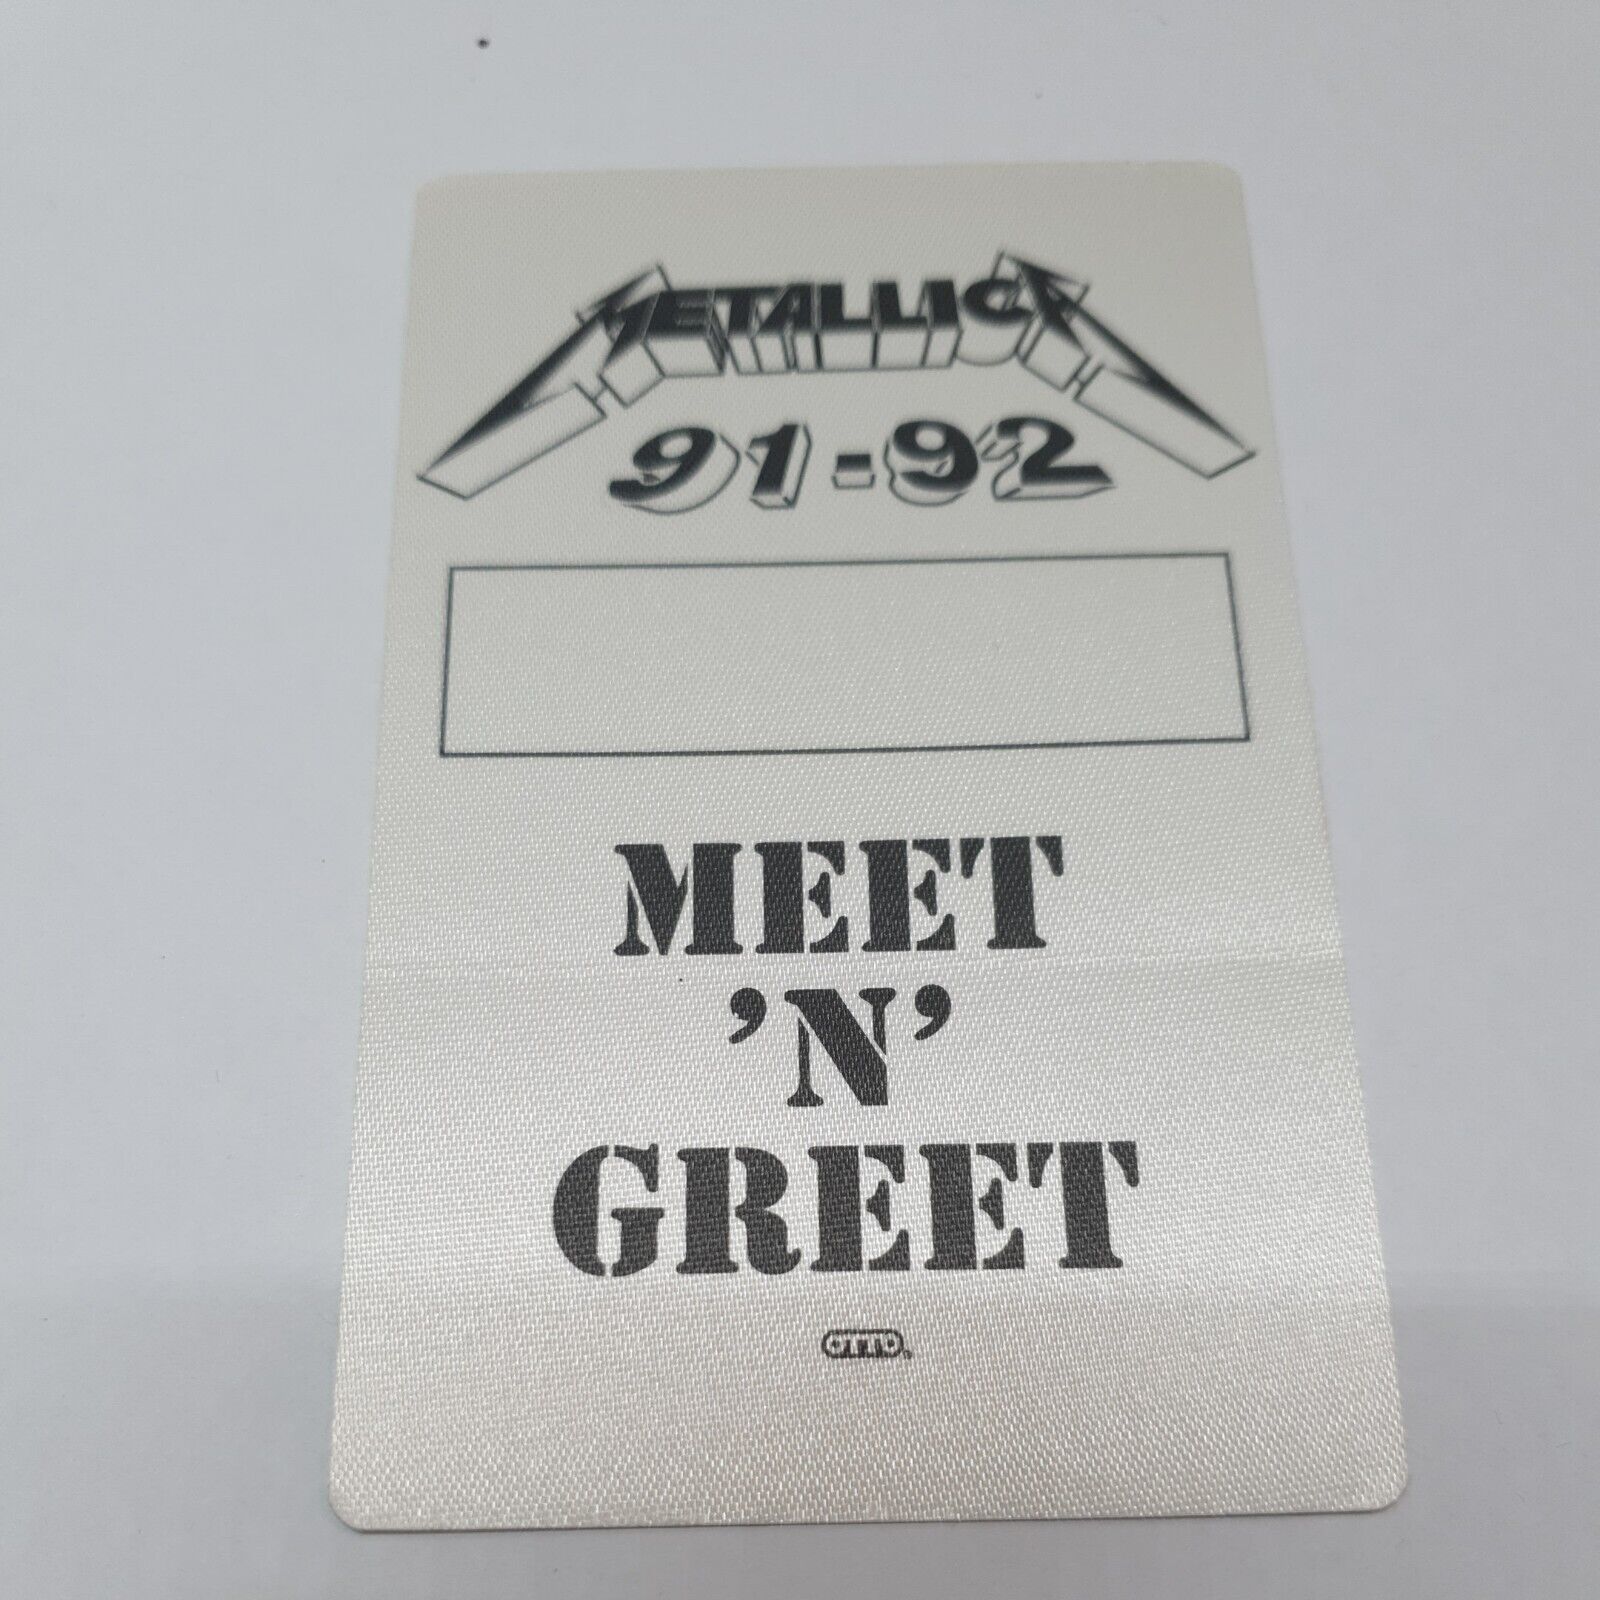  Genuine Vintage Metallica MEET AND GREET pass patch  1991  RARE ..OTTO